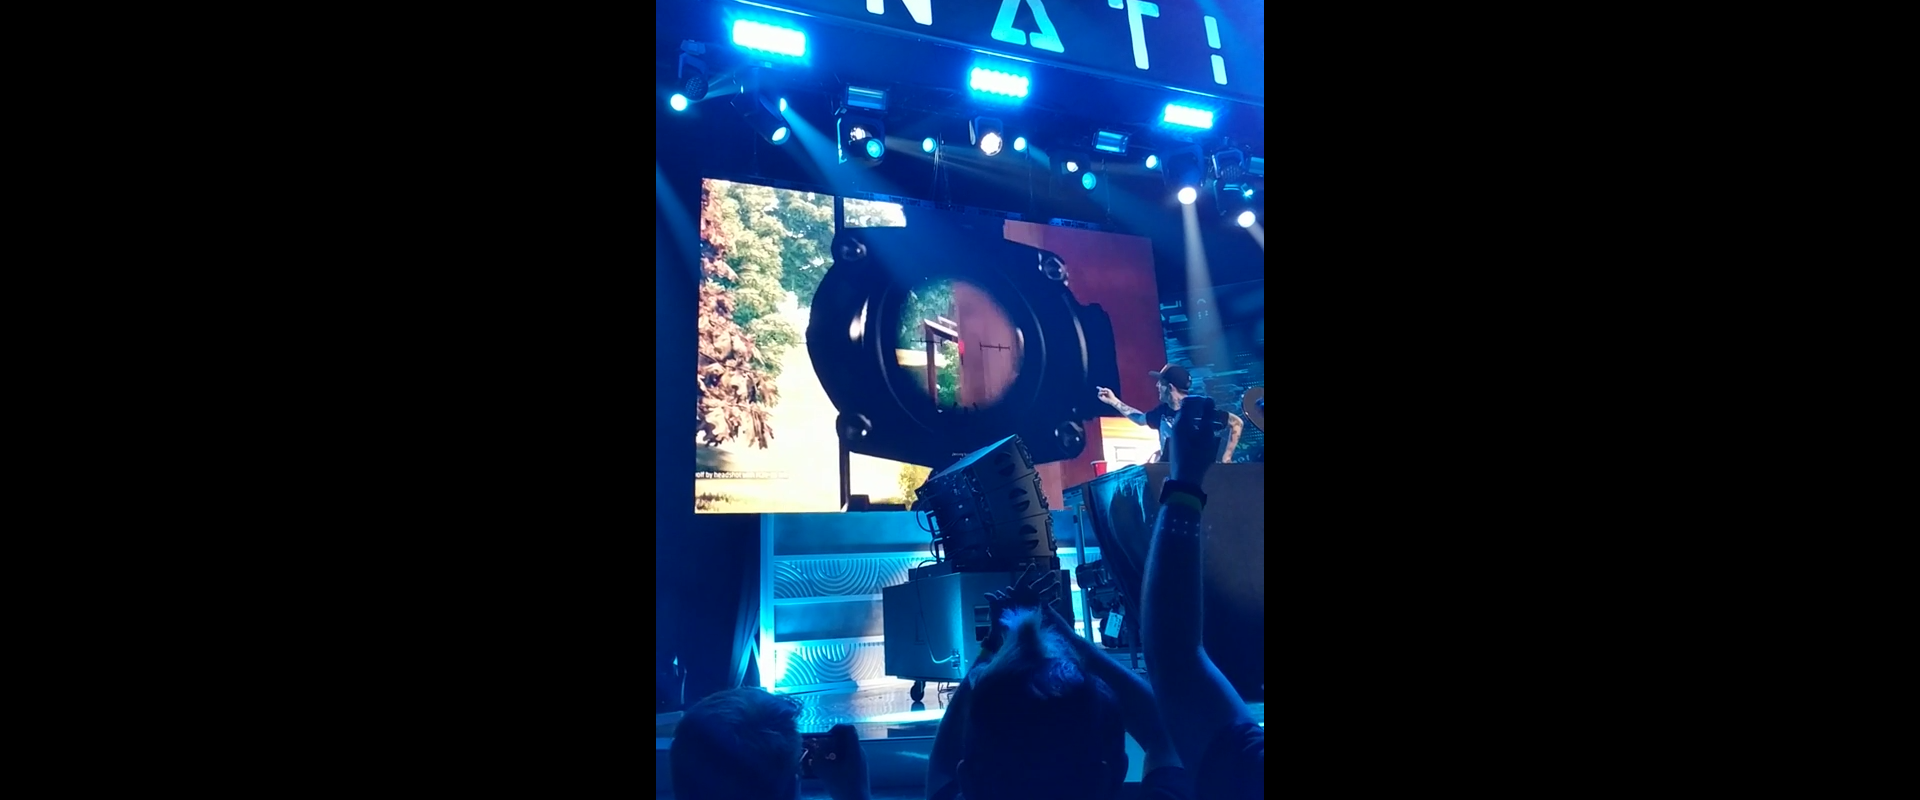 Deadmau5-t még a koncertjeire is kíséri a PUBG